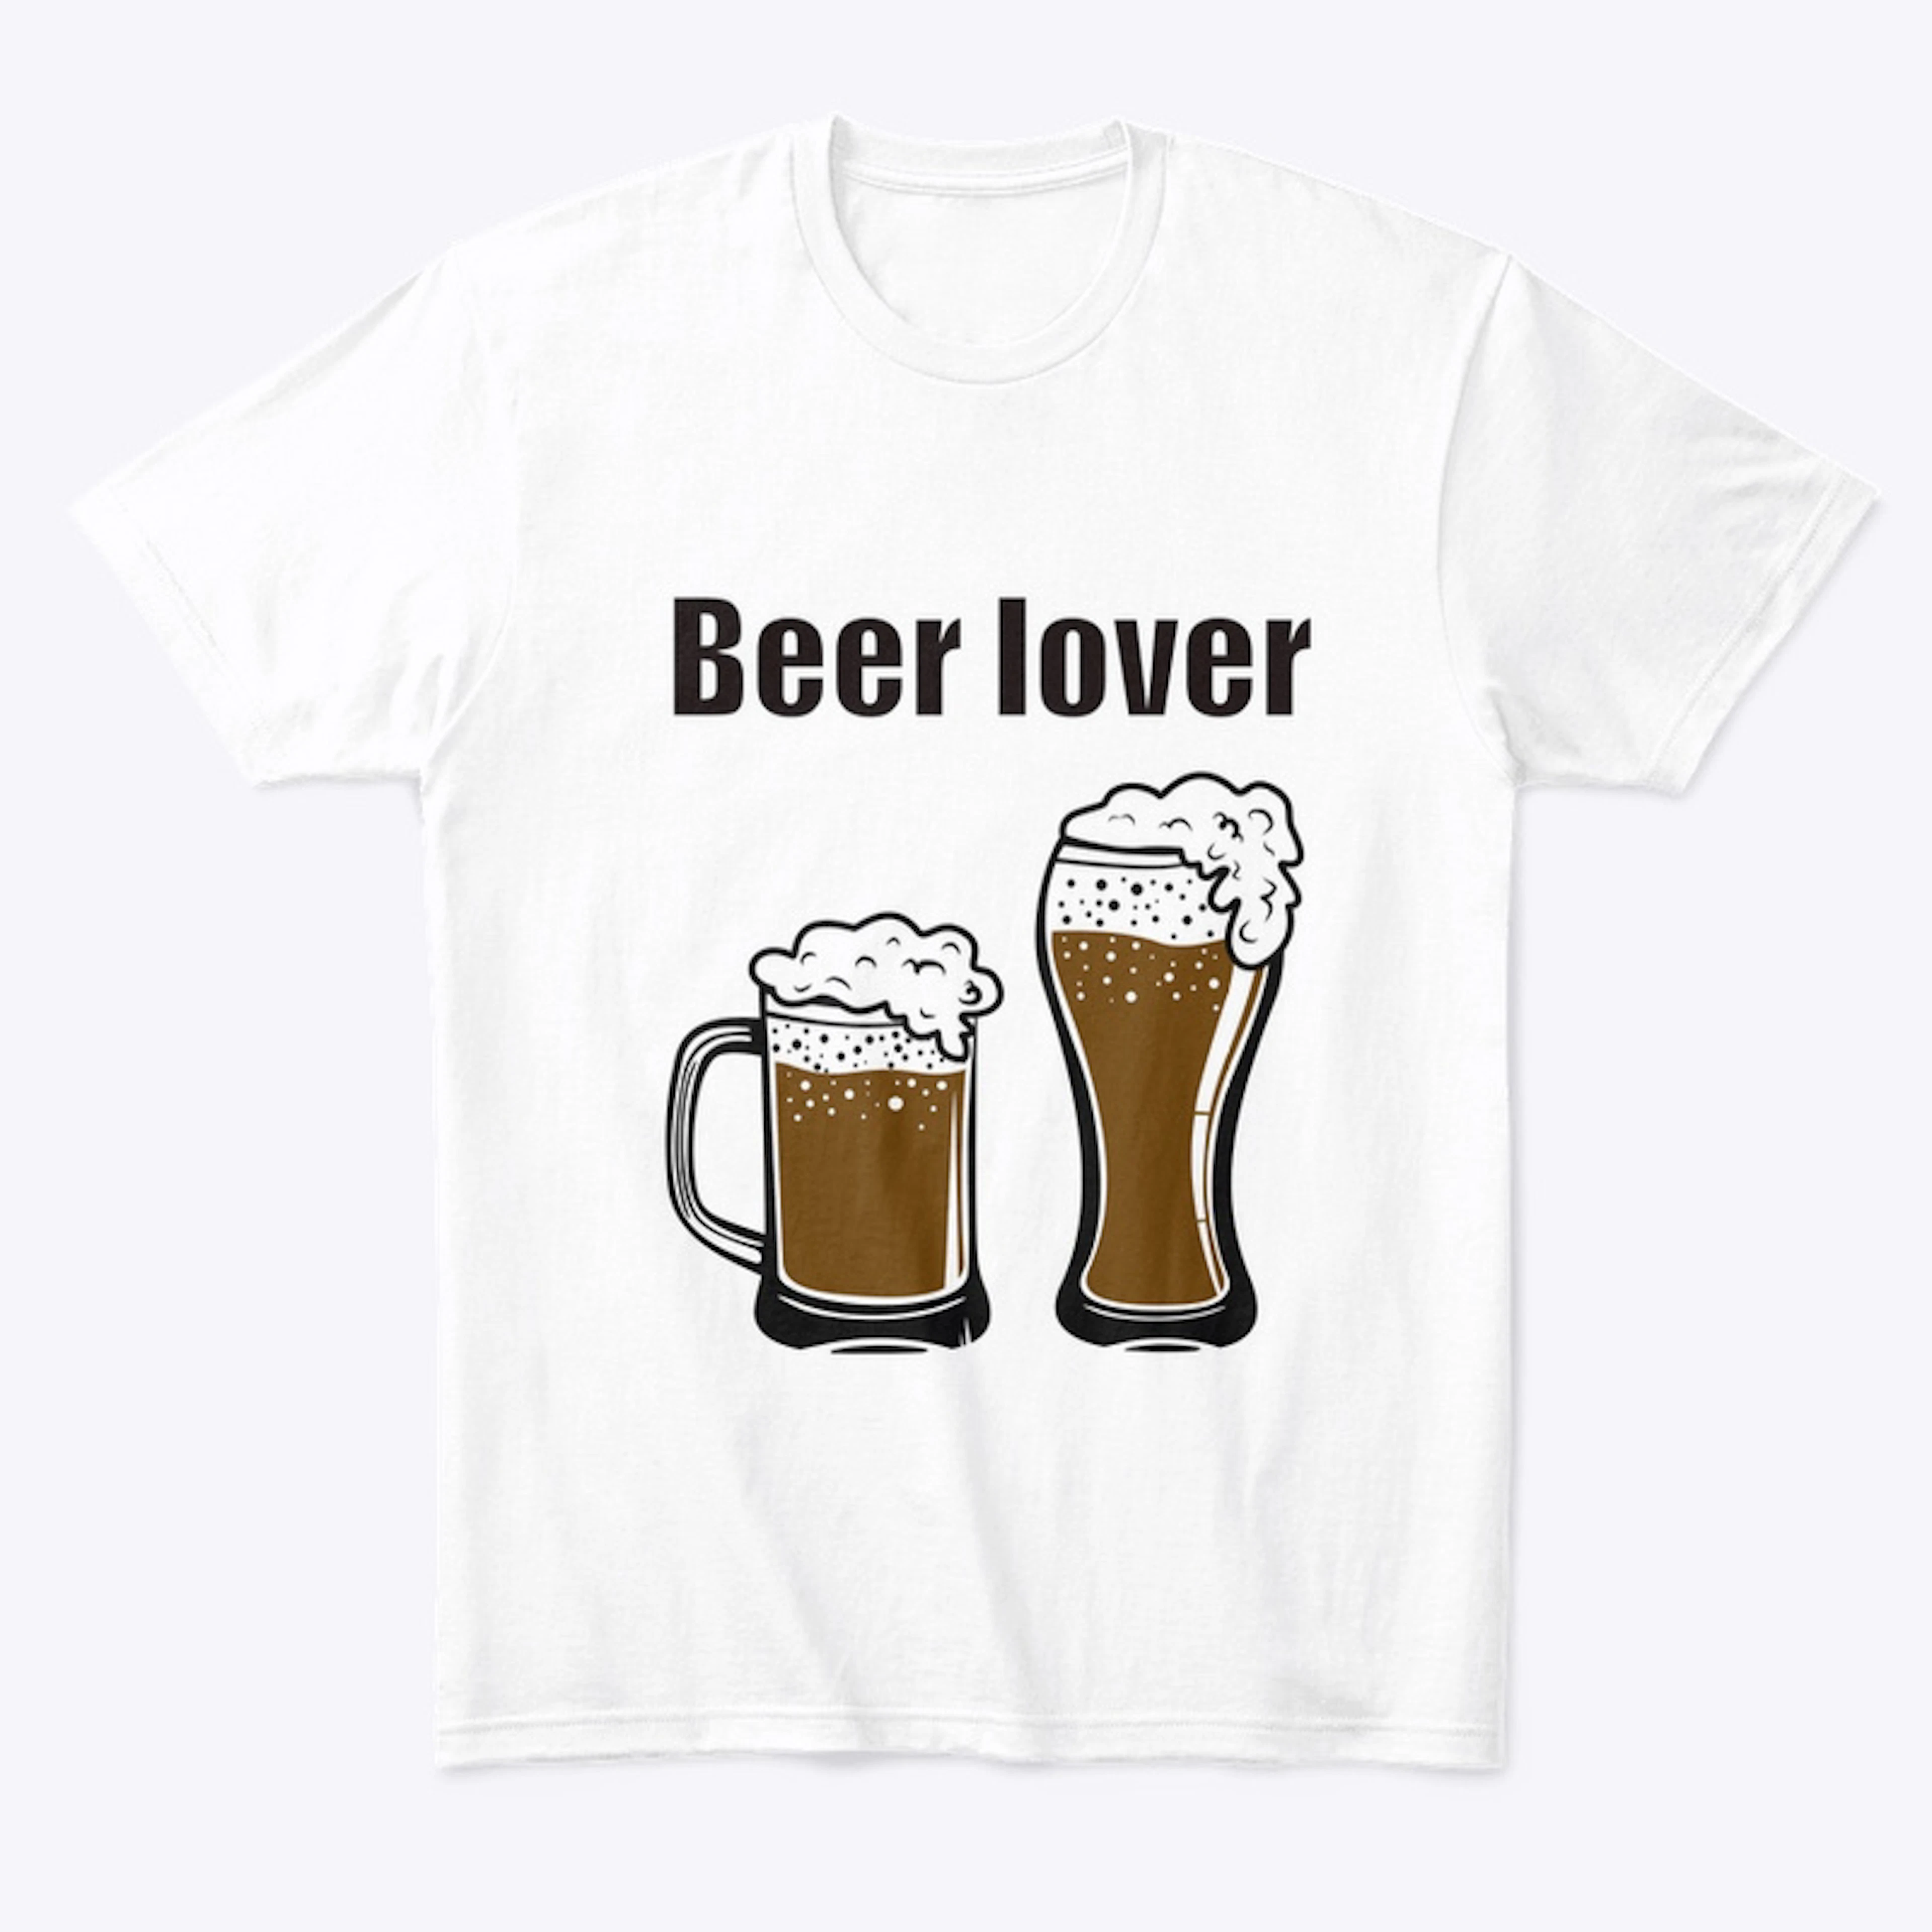 Unisex T-Shirt “Beer lover”